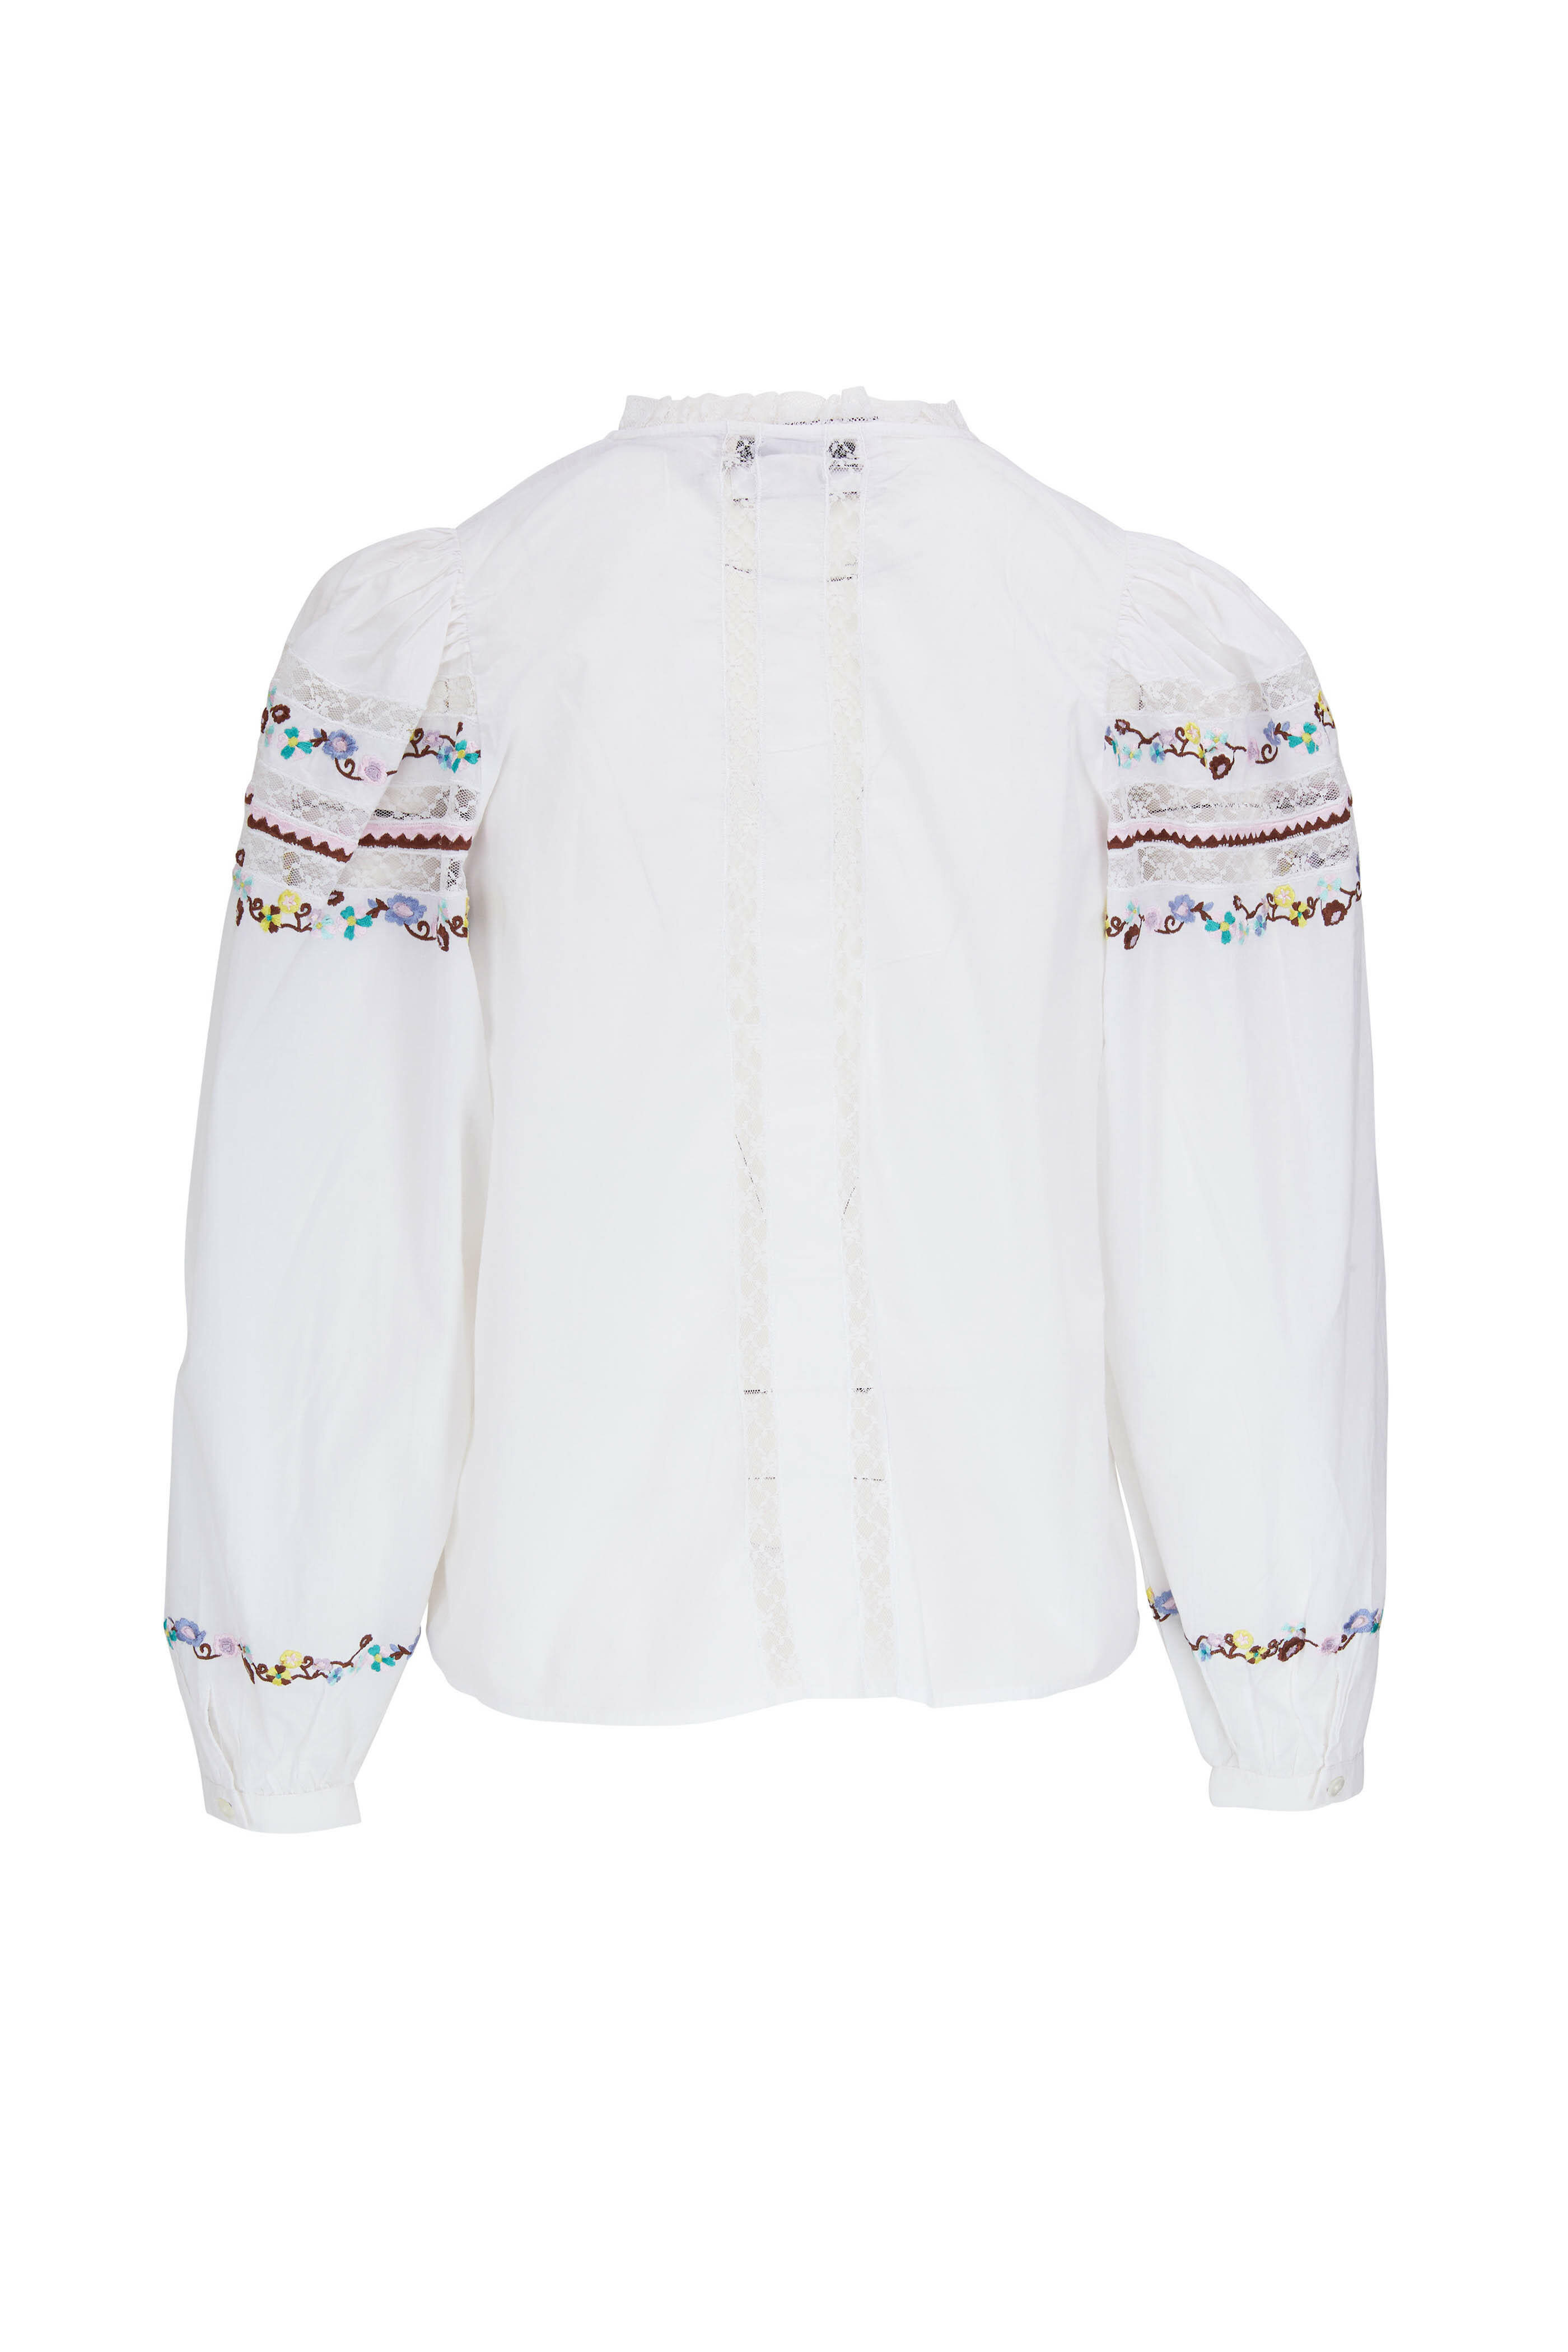 Dorothee Schumacher - Summer Feeling White Button Down Shirt